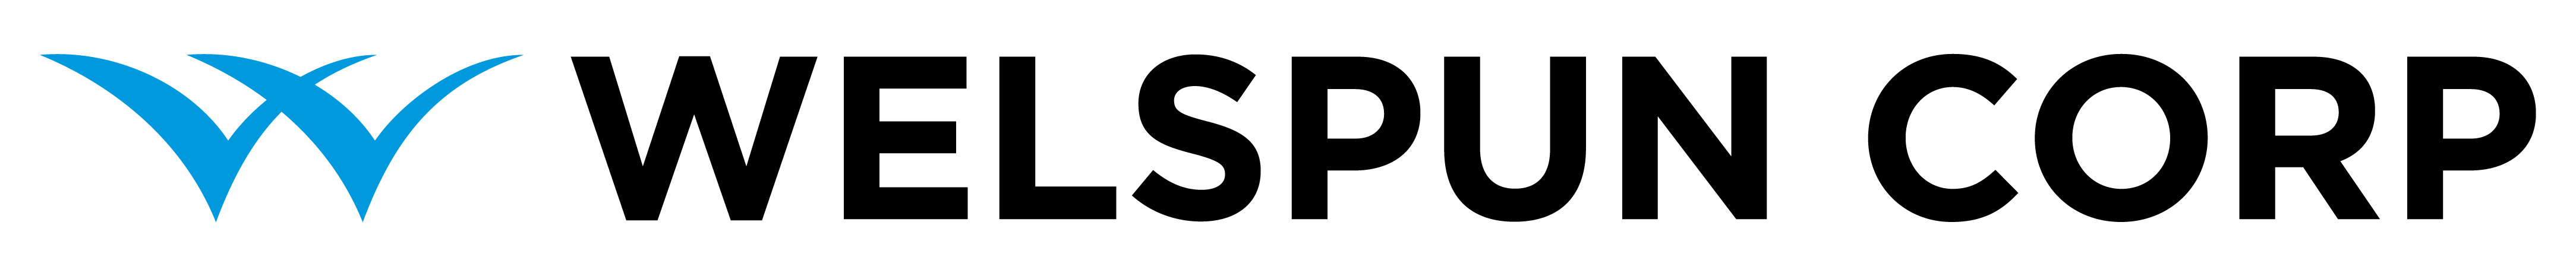 Welspun-Corp-Logo